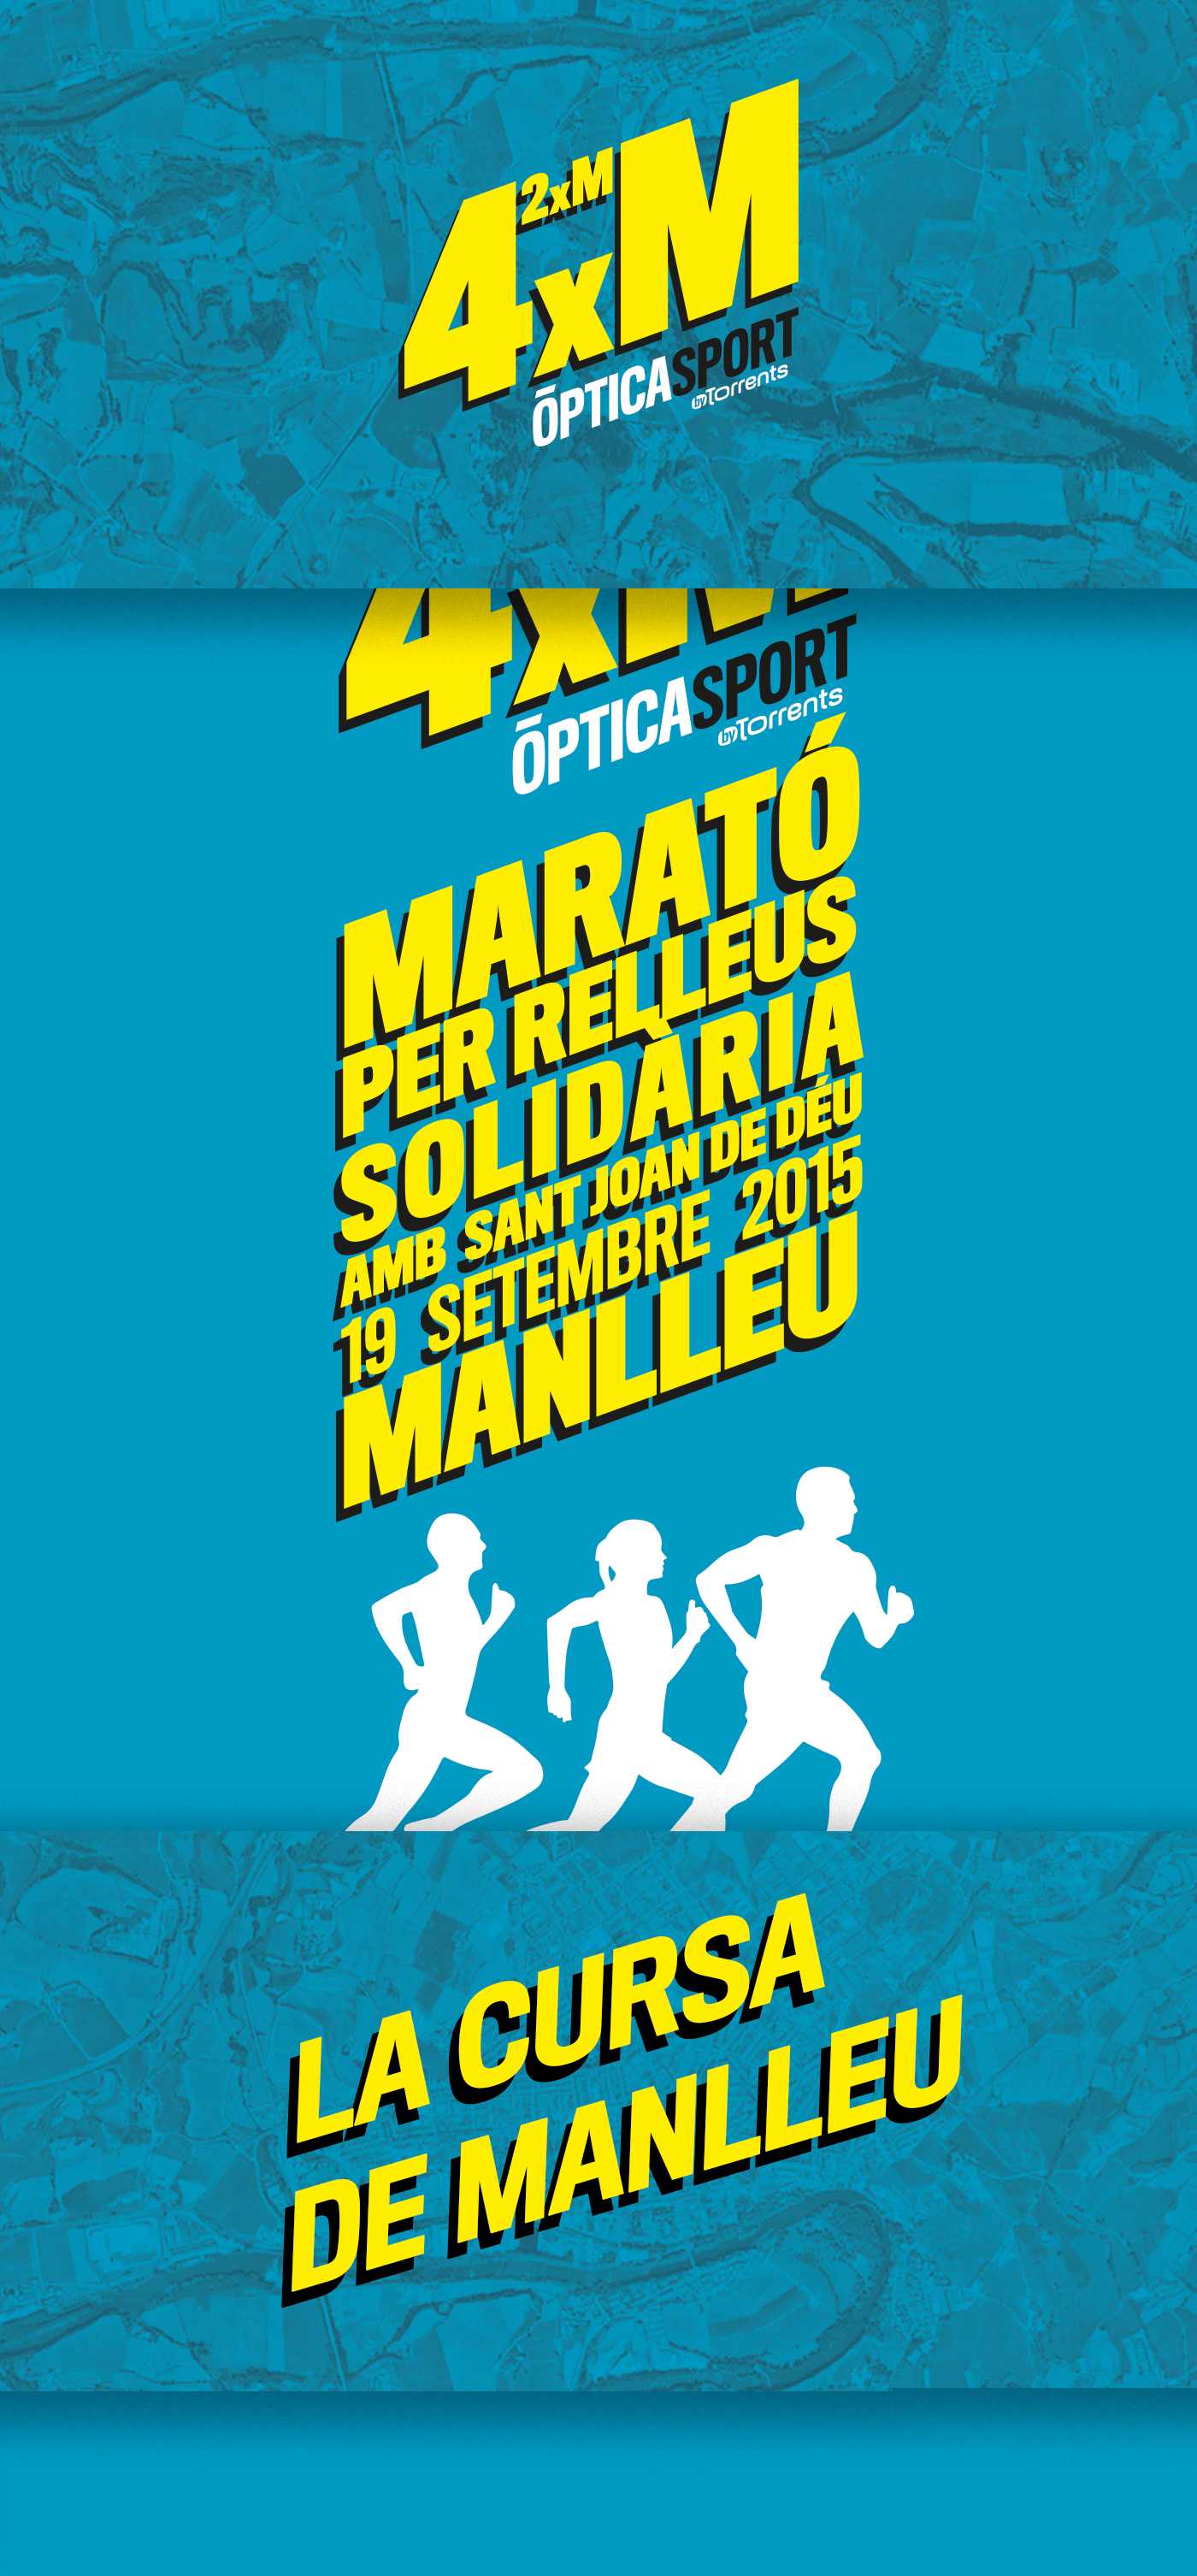 poster graphic Behance Disseny gràfic manlleu barcelona design marato lovedesign